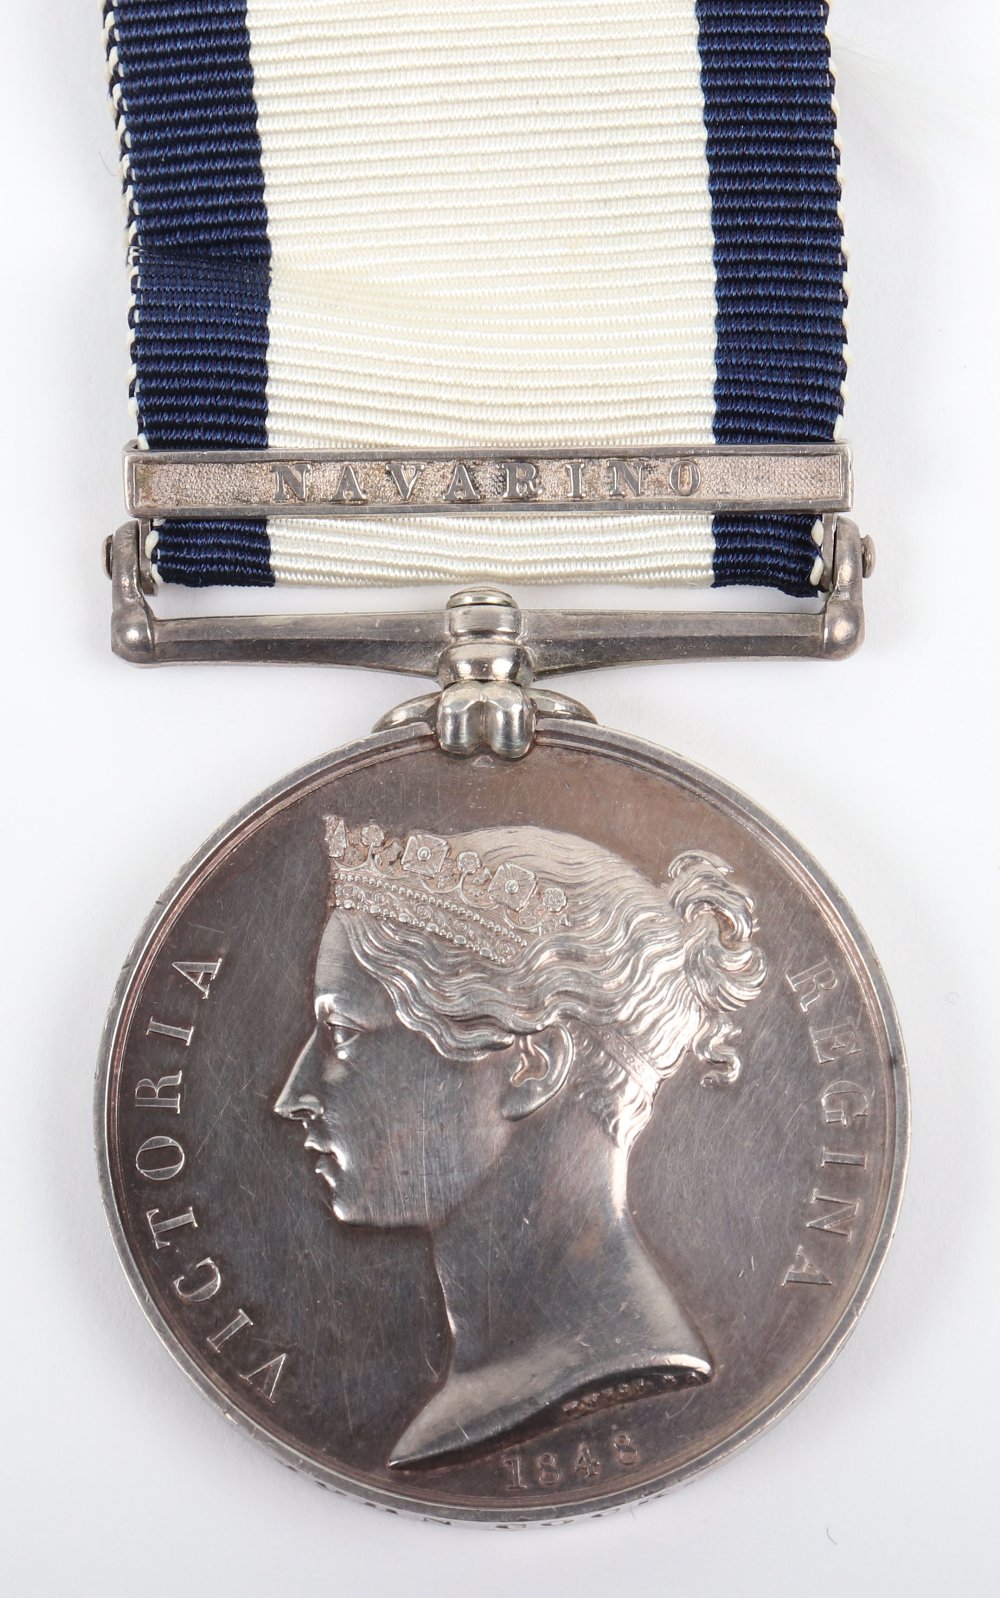 British Naval General Service Medal 1793-1840